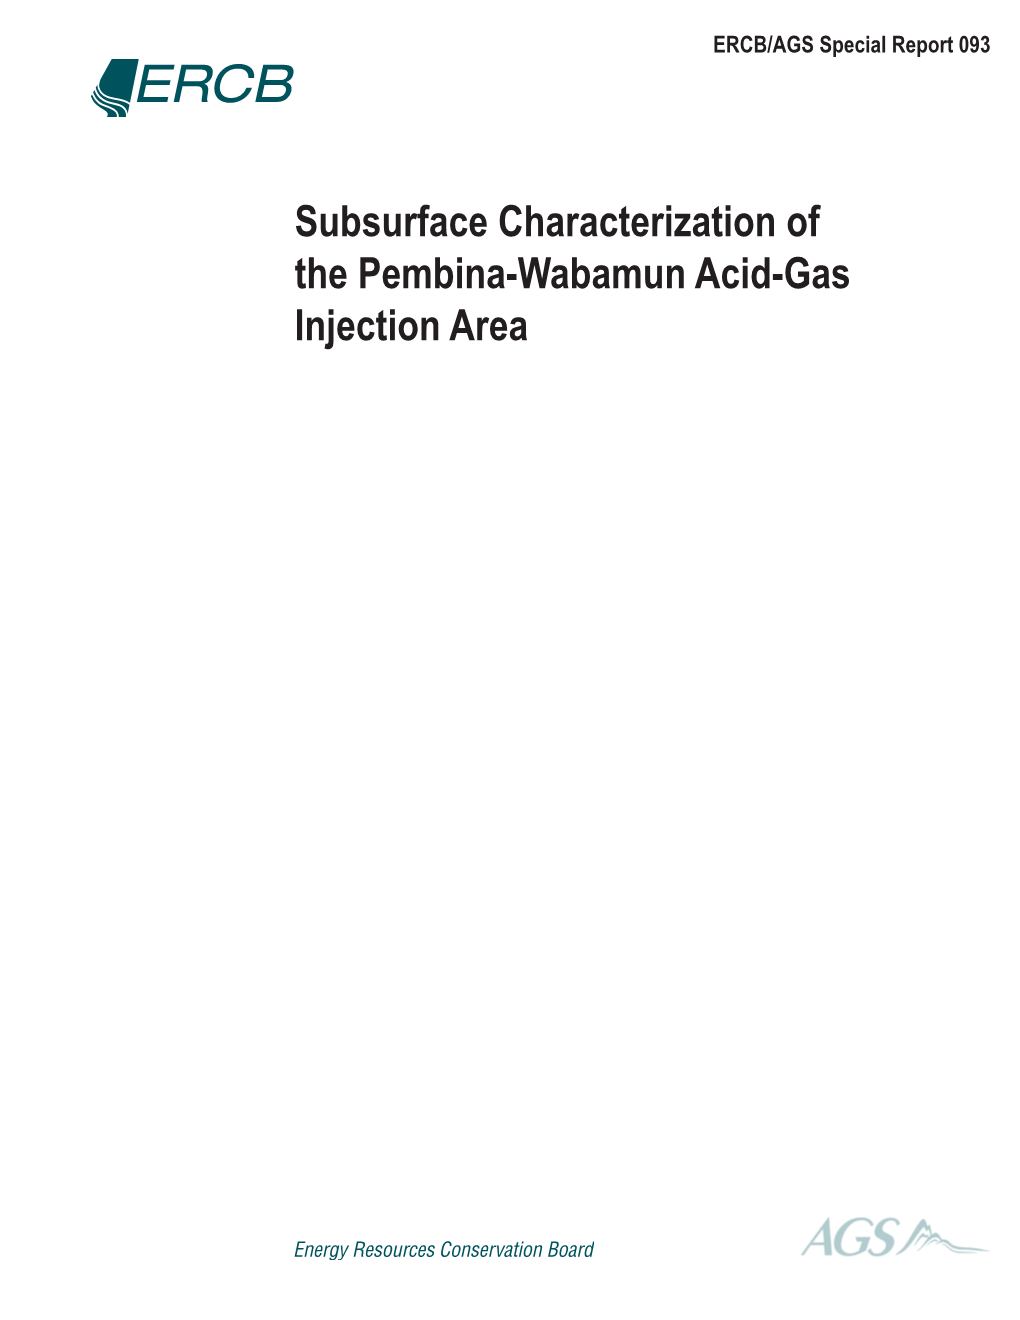 Subsurface Characterization of the Pembina-Wabamun Acid-Gas Injection Area